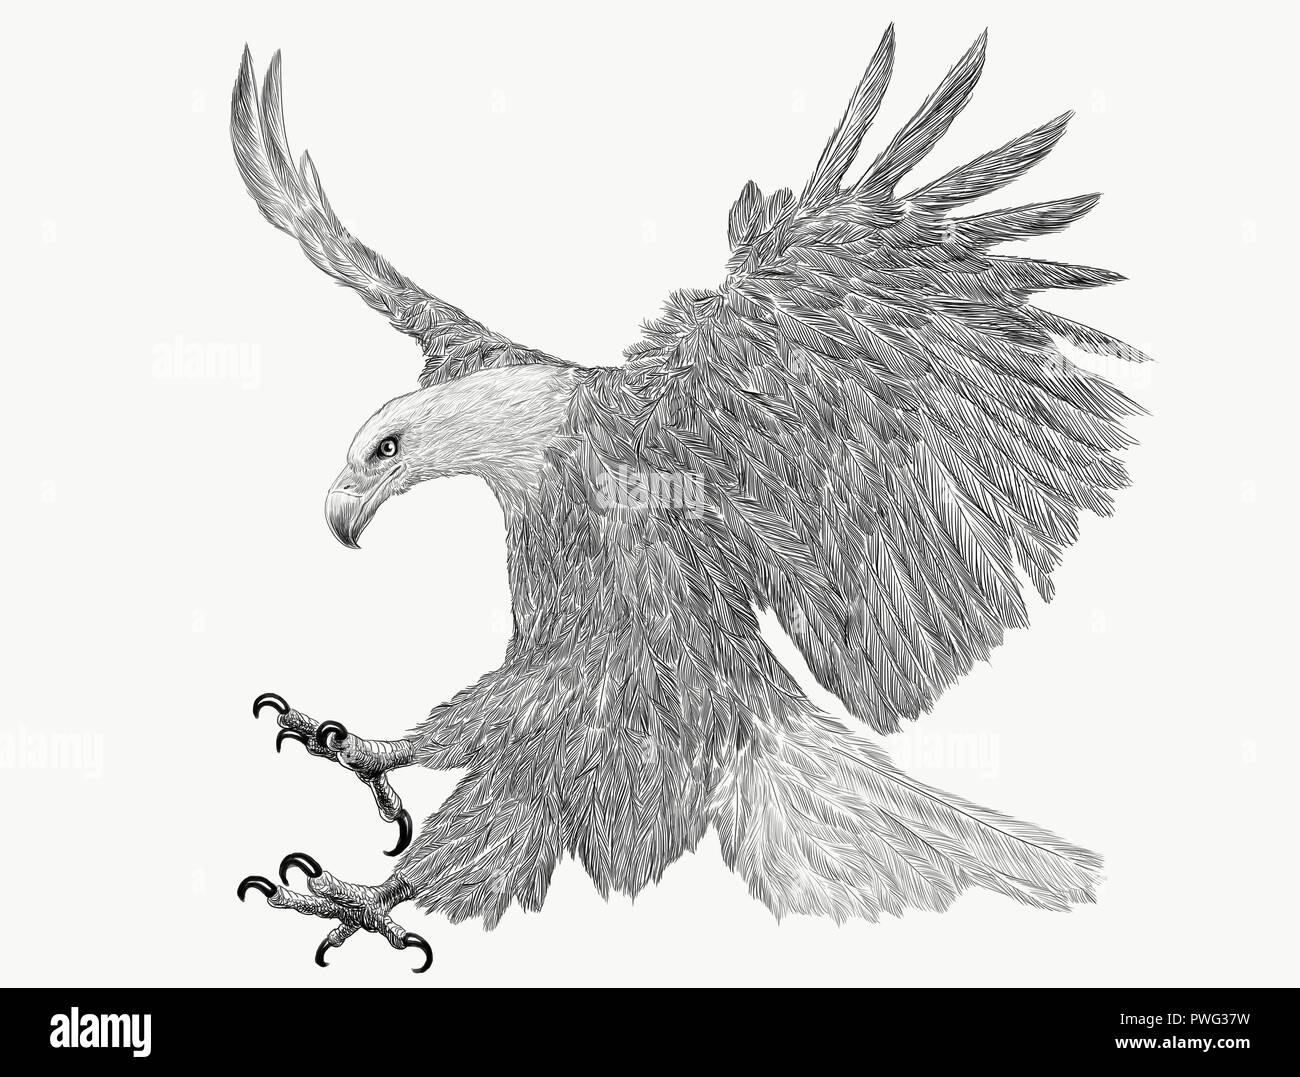 Bald eagle fly landing hand draw sketch monochrome on white background illustration. Stock Photo